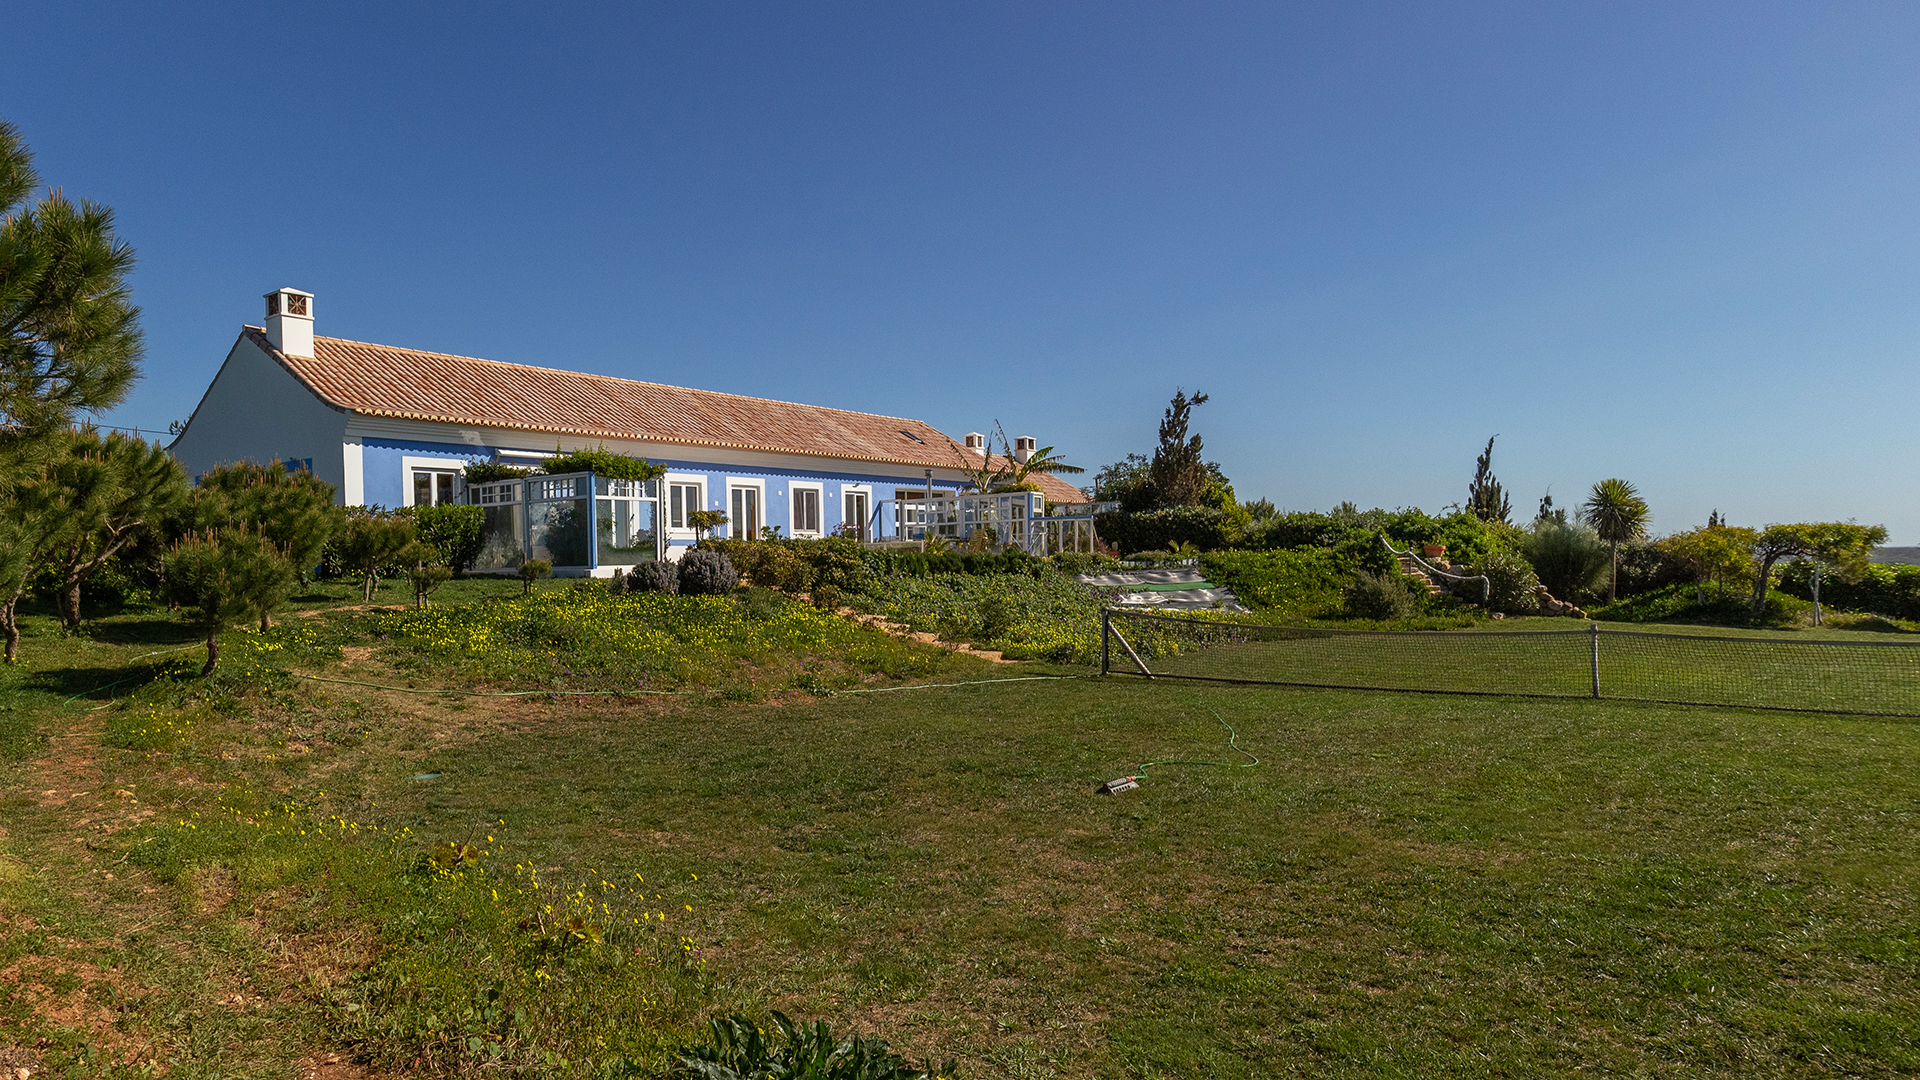 Propriedade rural com 10 hectares de terra e vista para o mar, Vila do Bispo, Algarve Barlavento | LG1615 